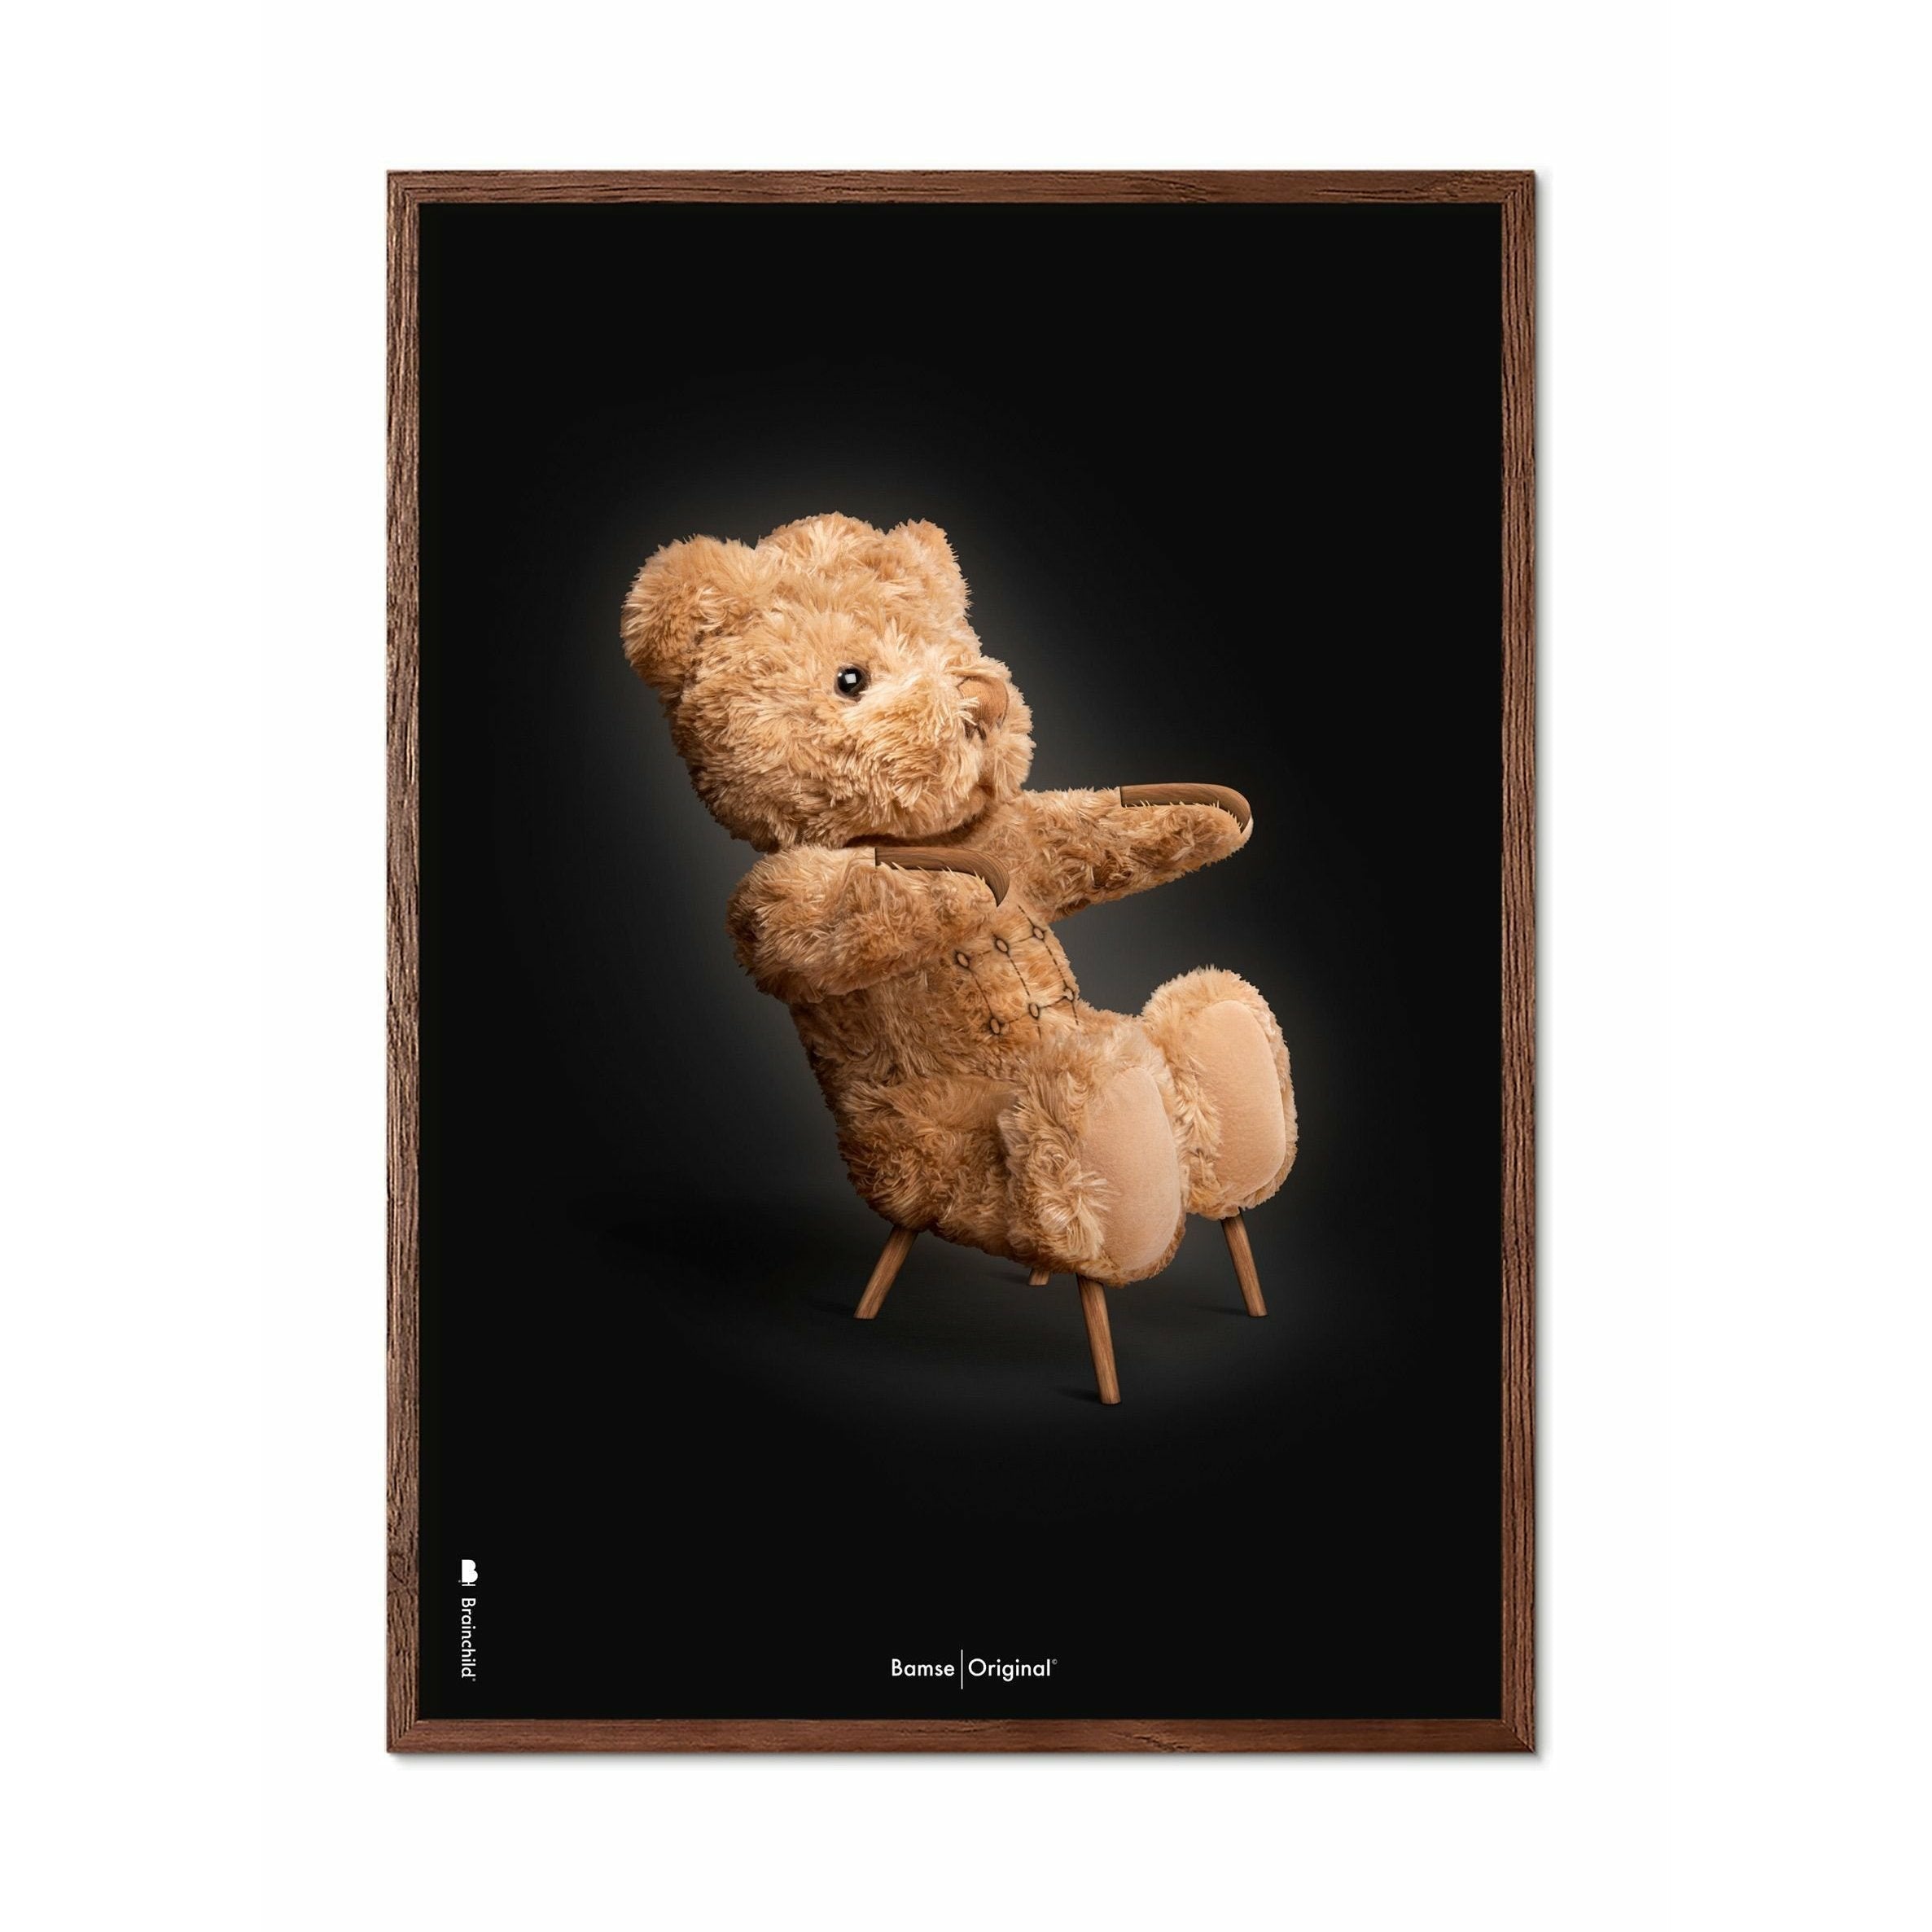 Brainchild Teddy Bear Classic Poster, Dark Wood Frame A5, Black Background